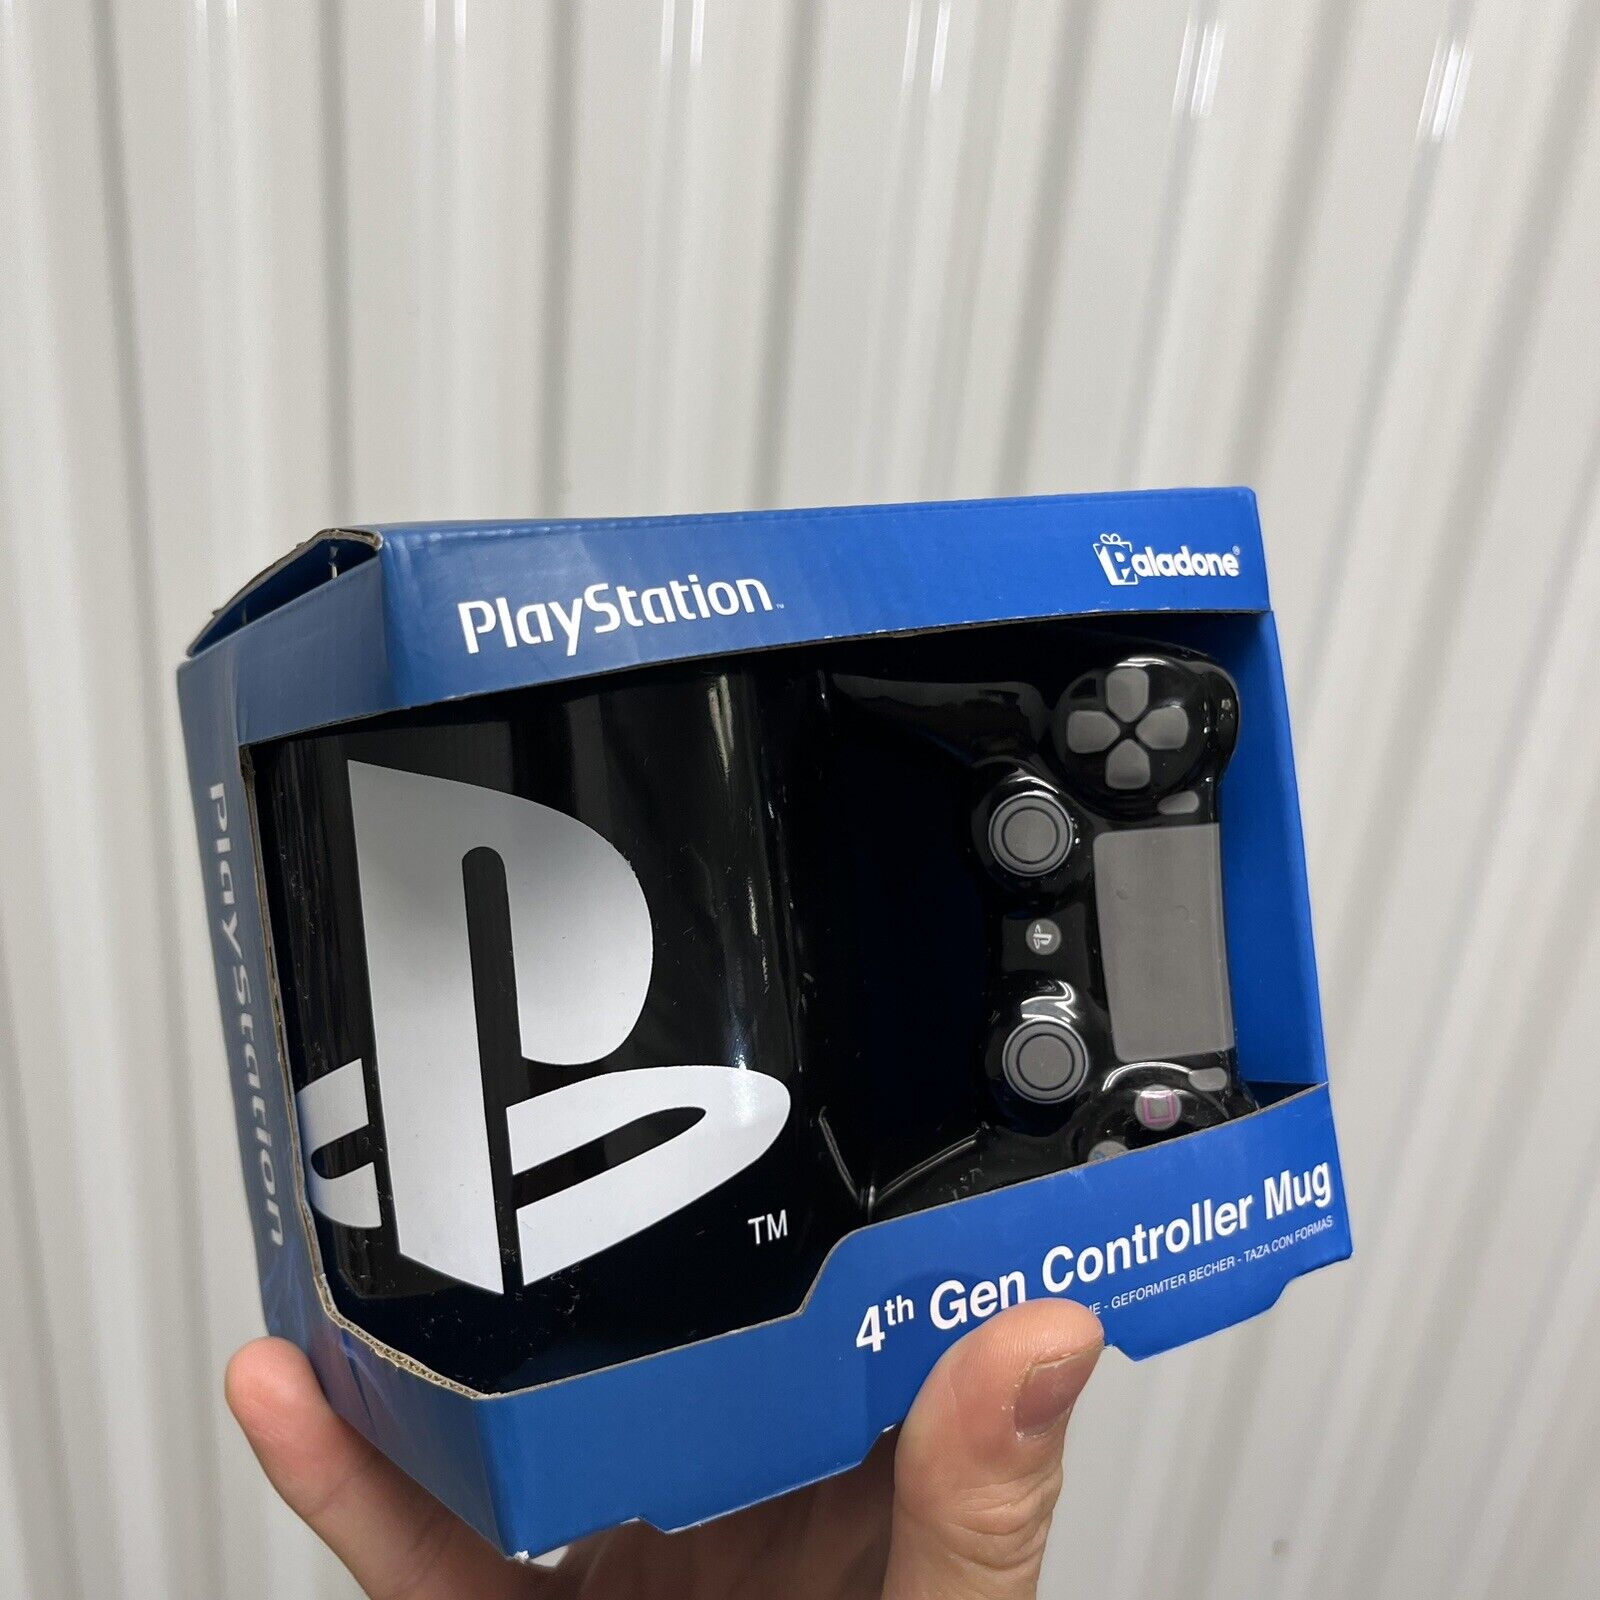 Playstation 4th Gen Controller Mug Black Paladone PS4 NEW